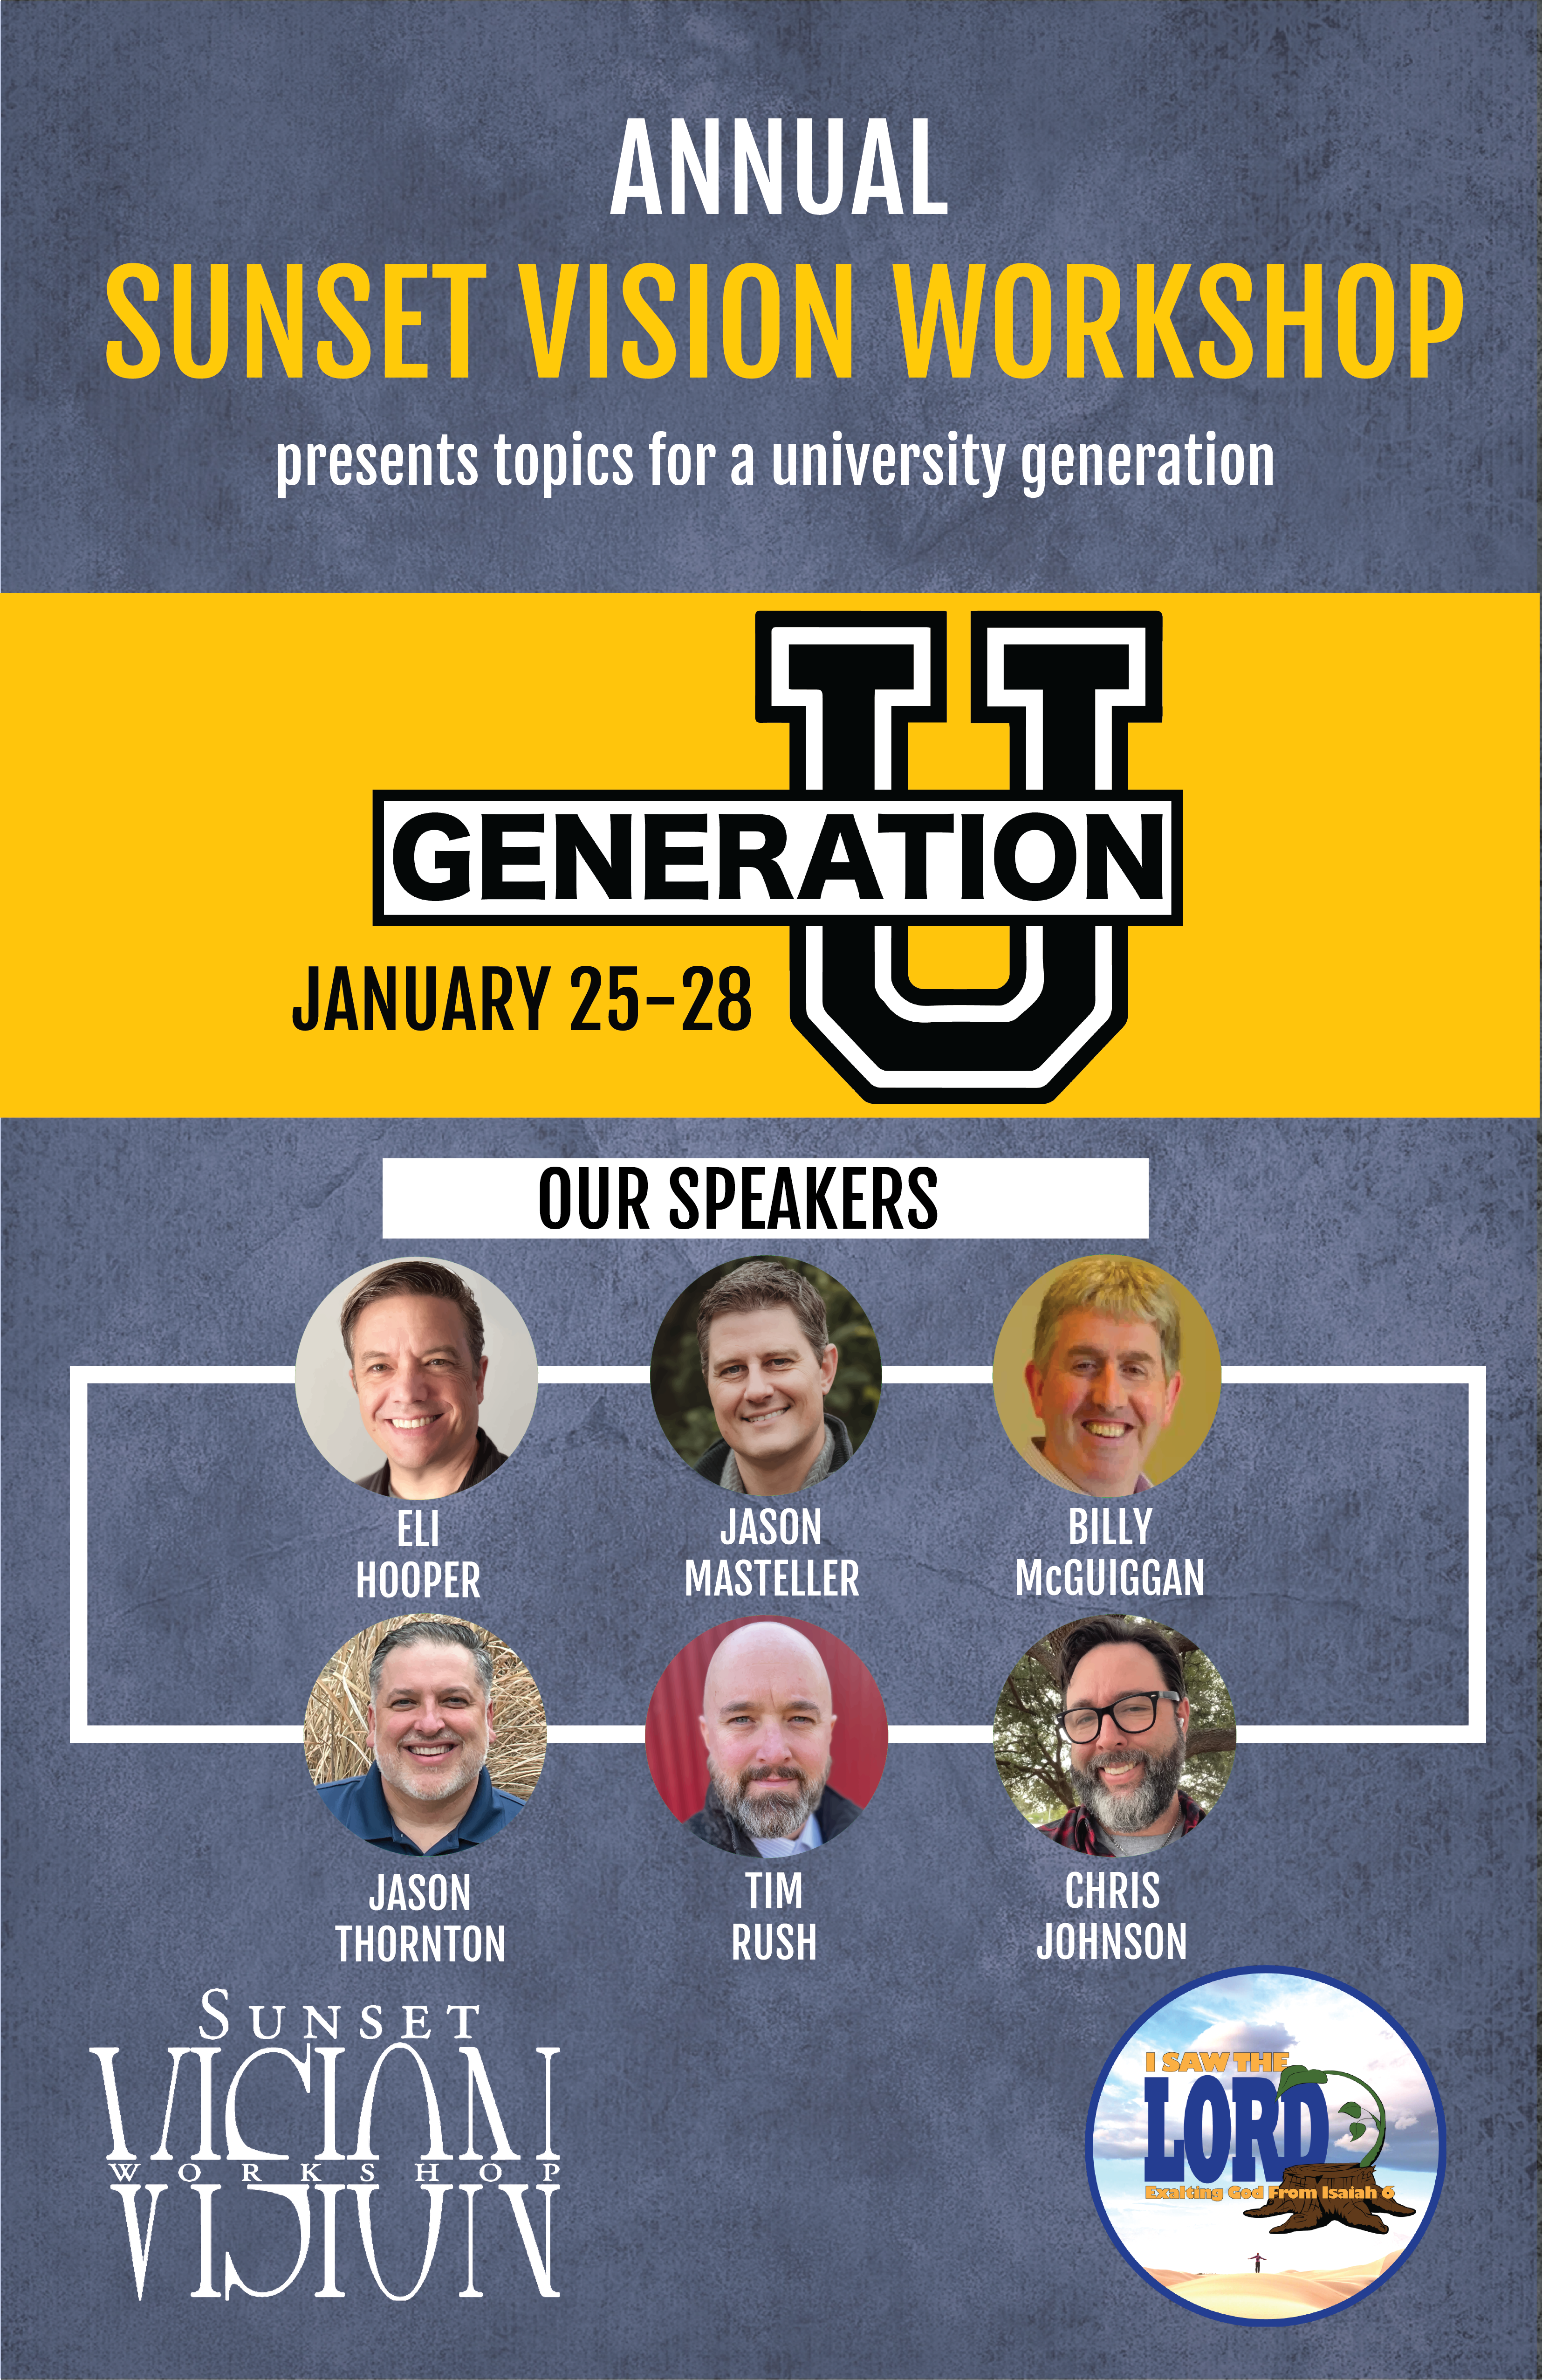 Generation U - Topics for a university generation